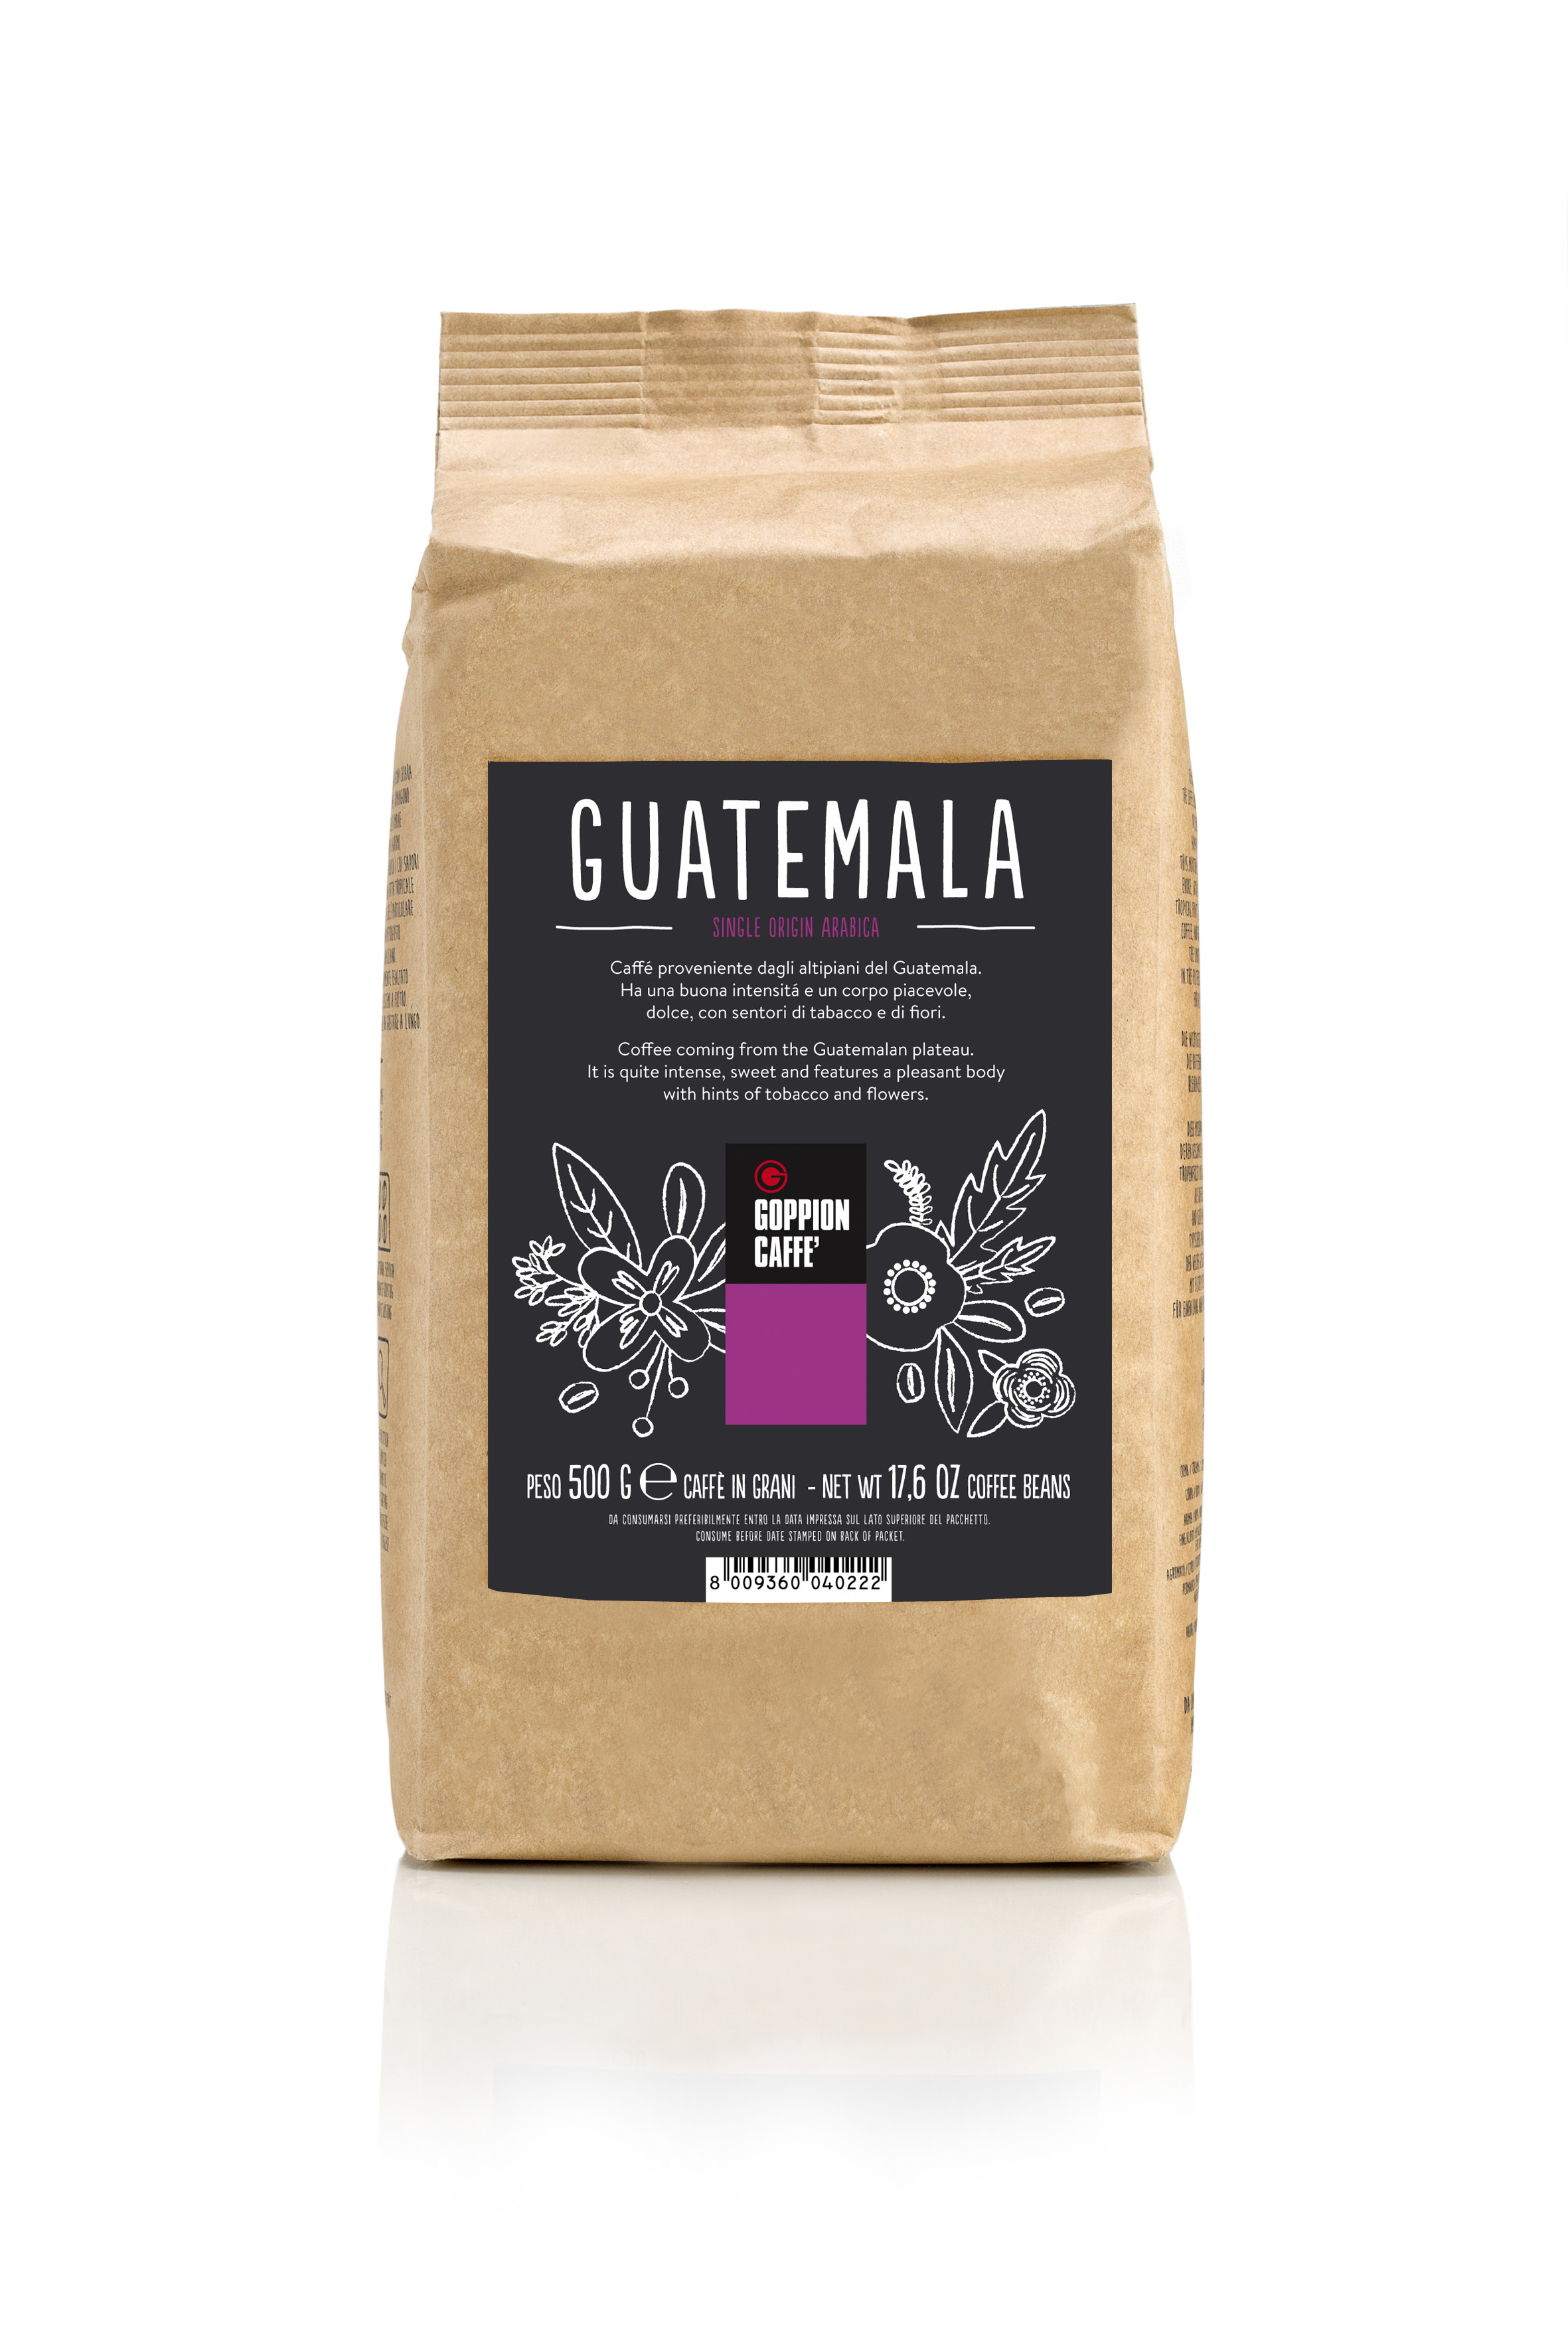 Guatemala Goppion Caffè